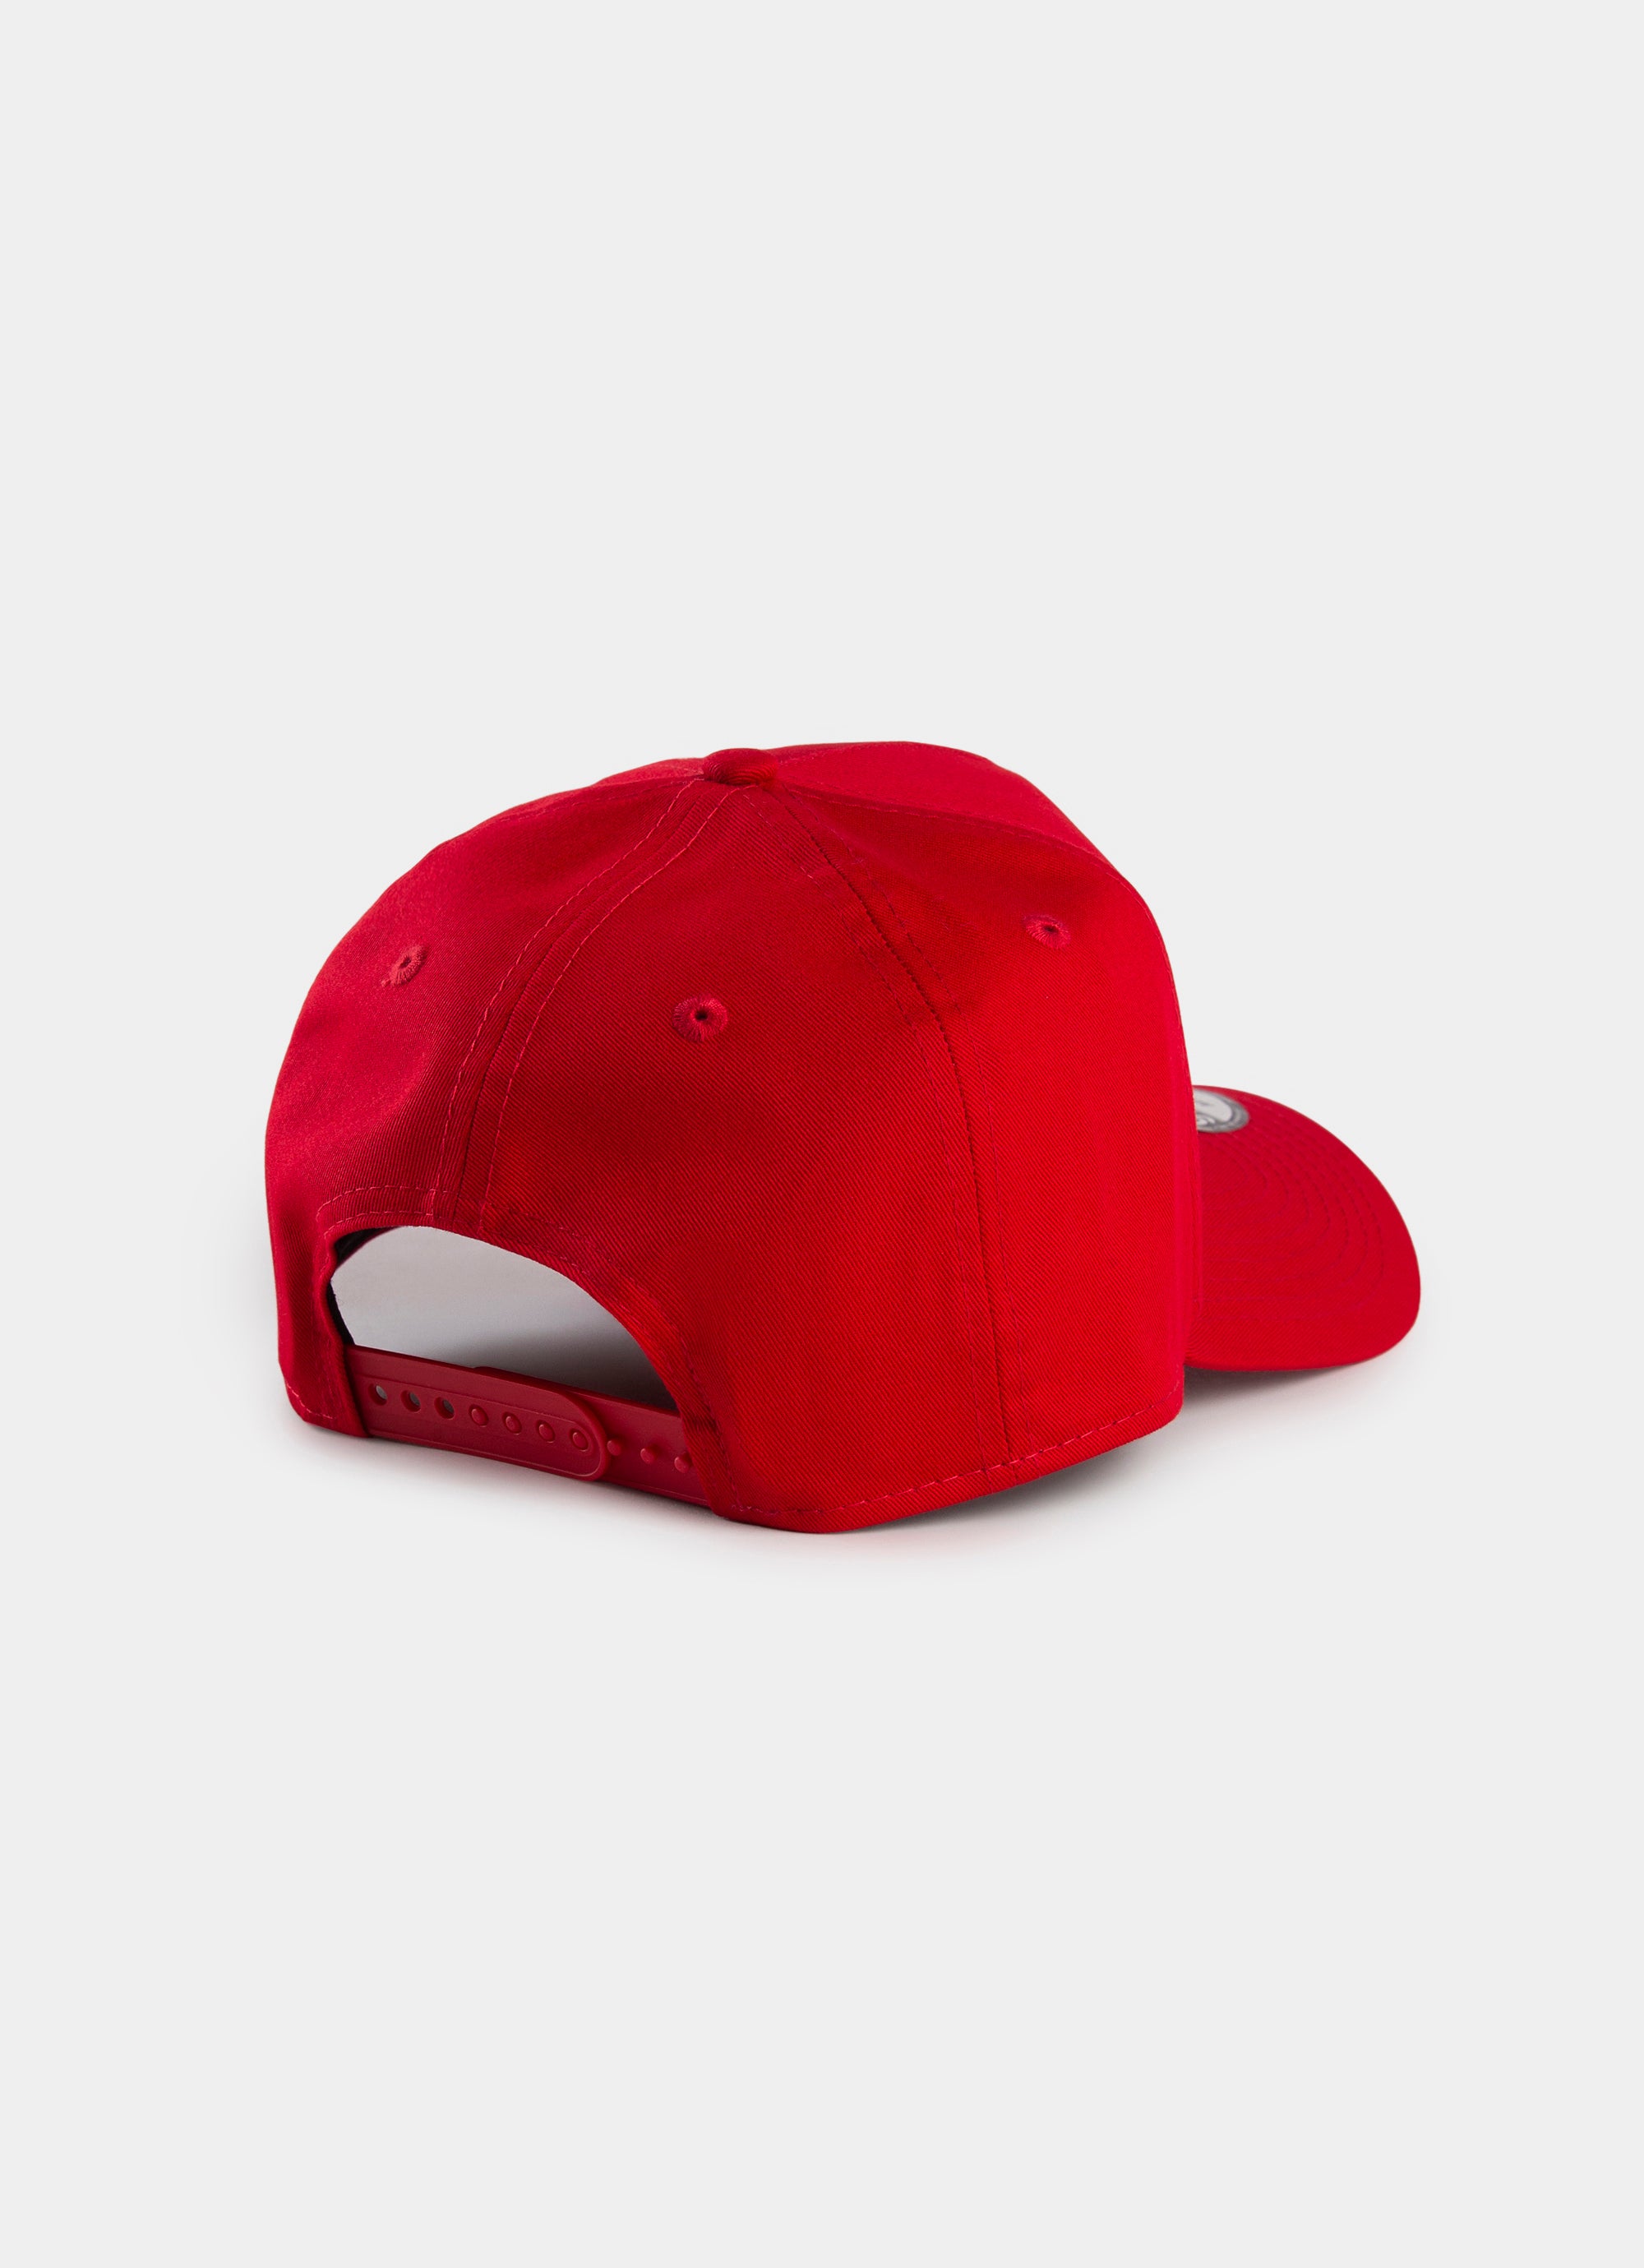 MLB Boston Red Sox Basic CapHat by Fan Favorite  Walmartcom